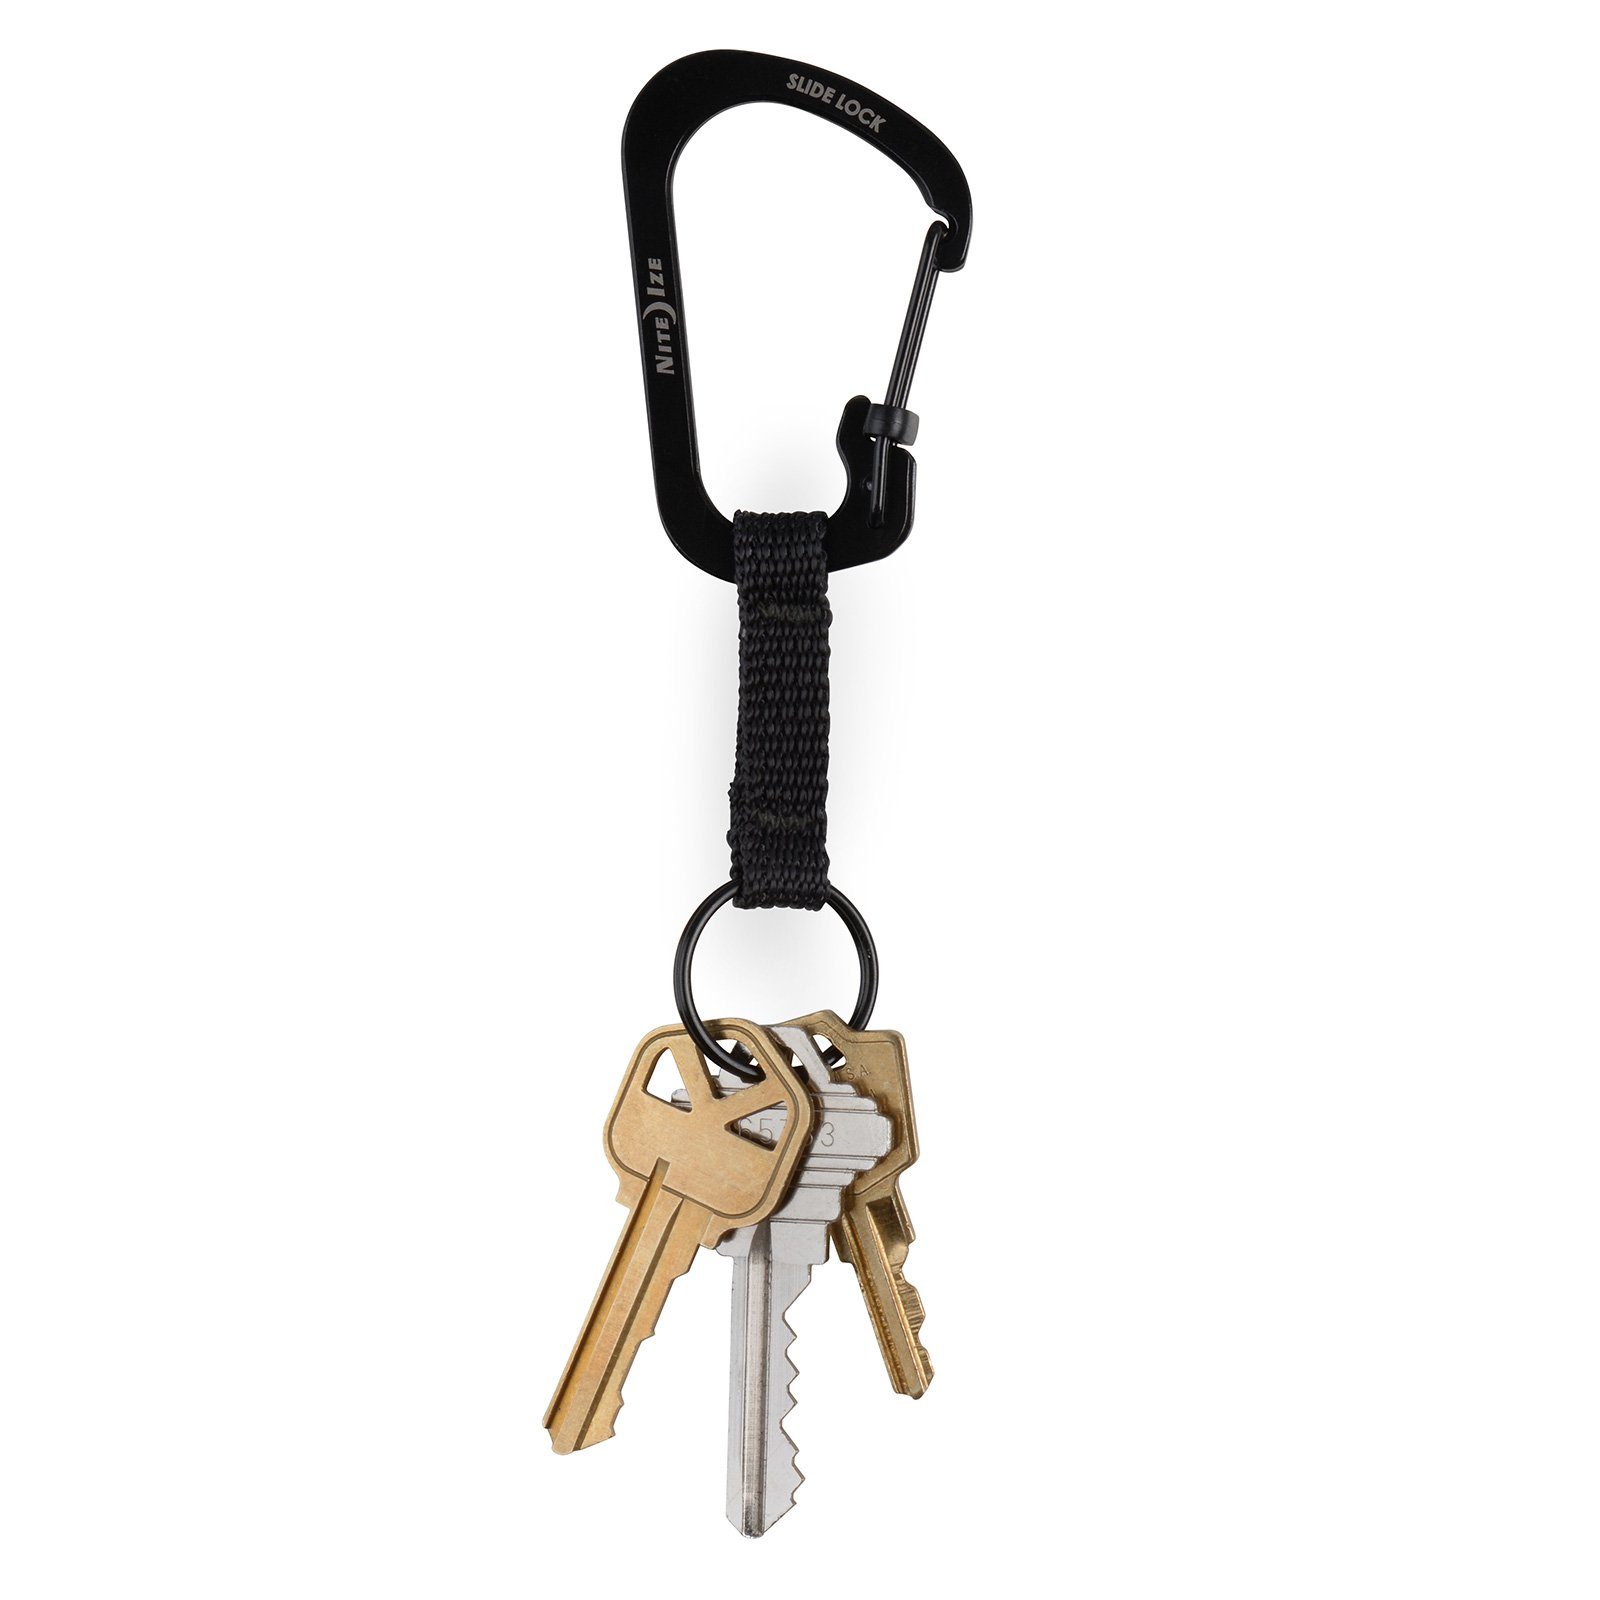 SlideLock Ring Anhänger Ize Karabiner Key Haken Ring, Schnapp Karabiner Schlüssel Nite Mini